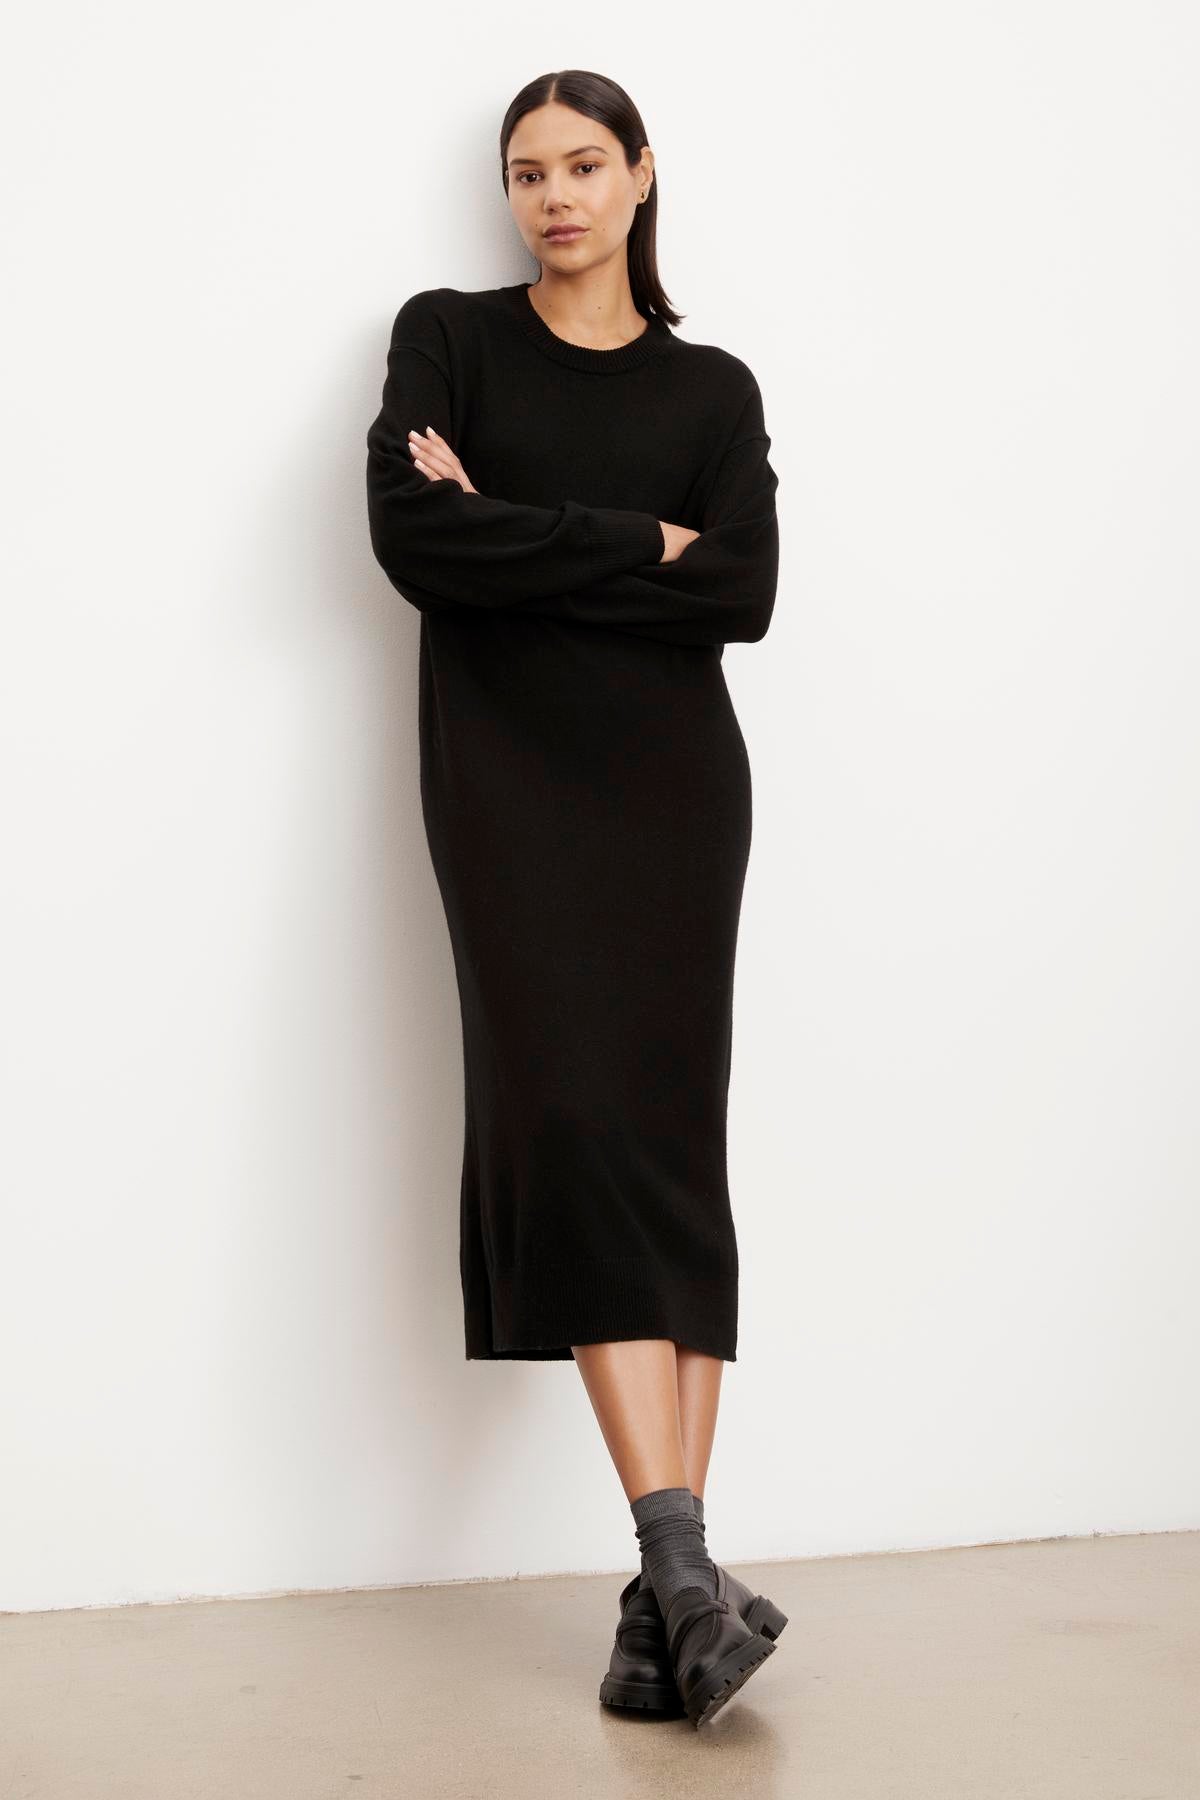 The model is wearing a cozy black KADEN SWEATER DRESS by Velvet by Graham & Spencer.-35654462603457